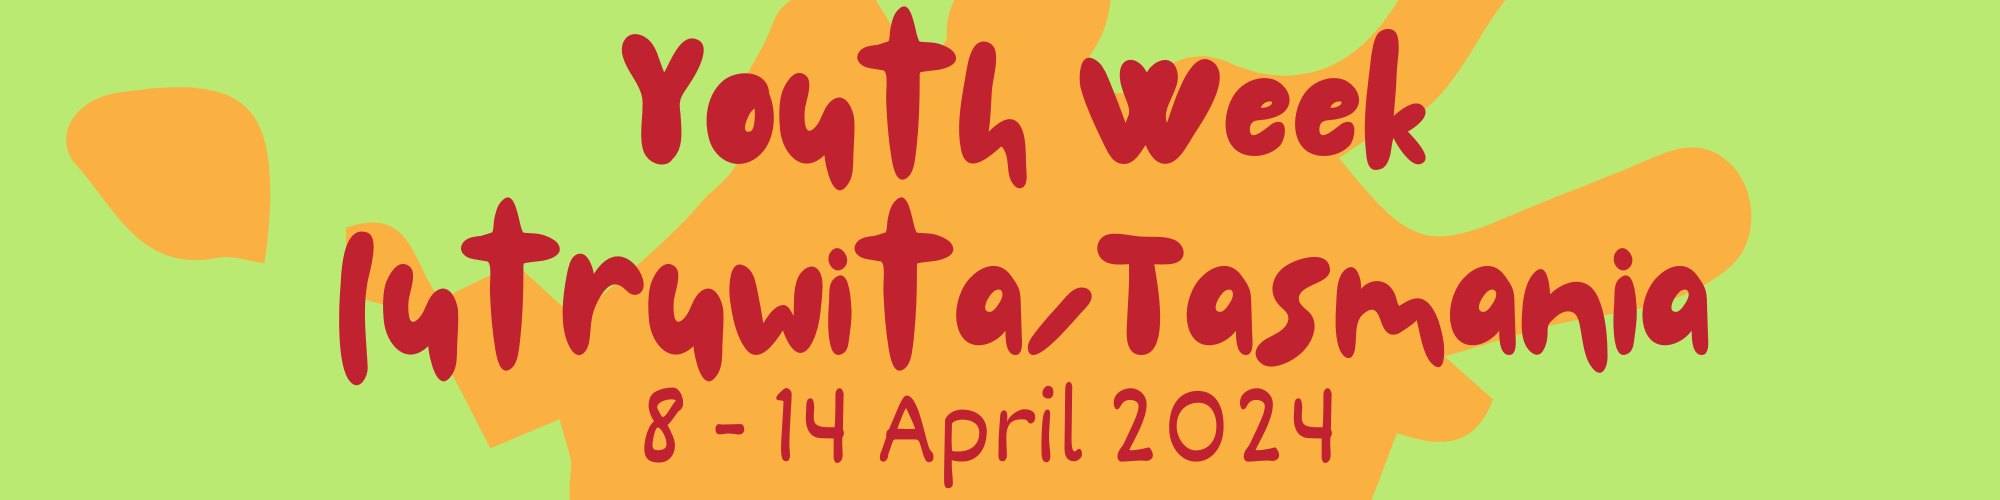 Youth Week lutruwita/Tasmania: 8 - 14 April 2024